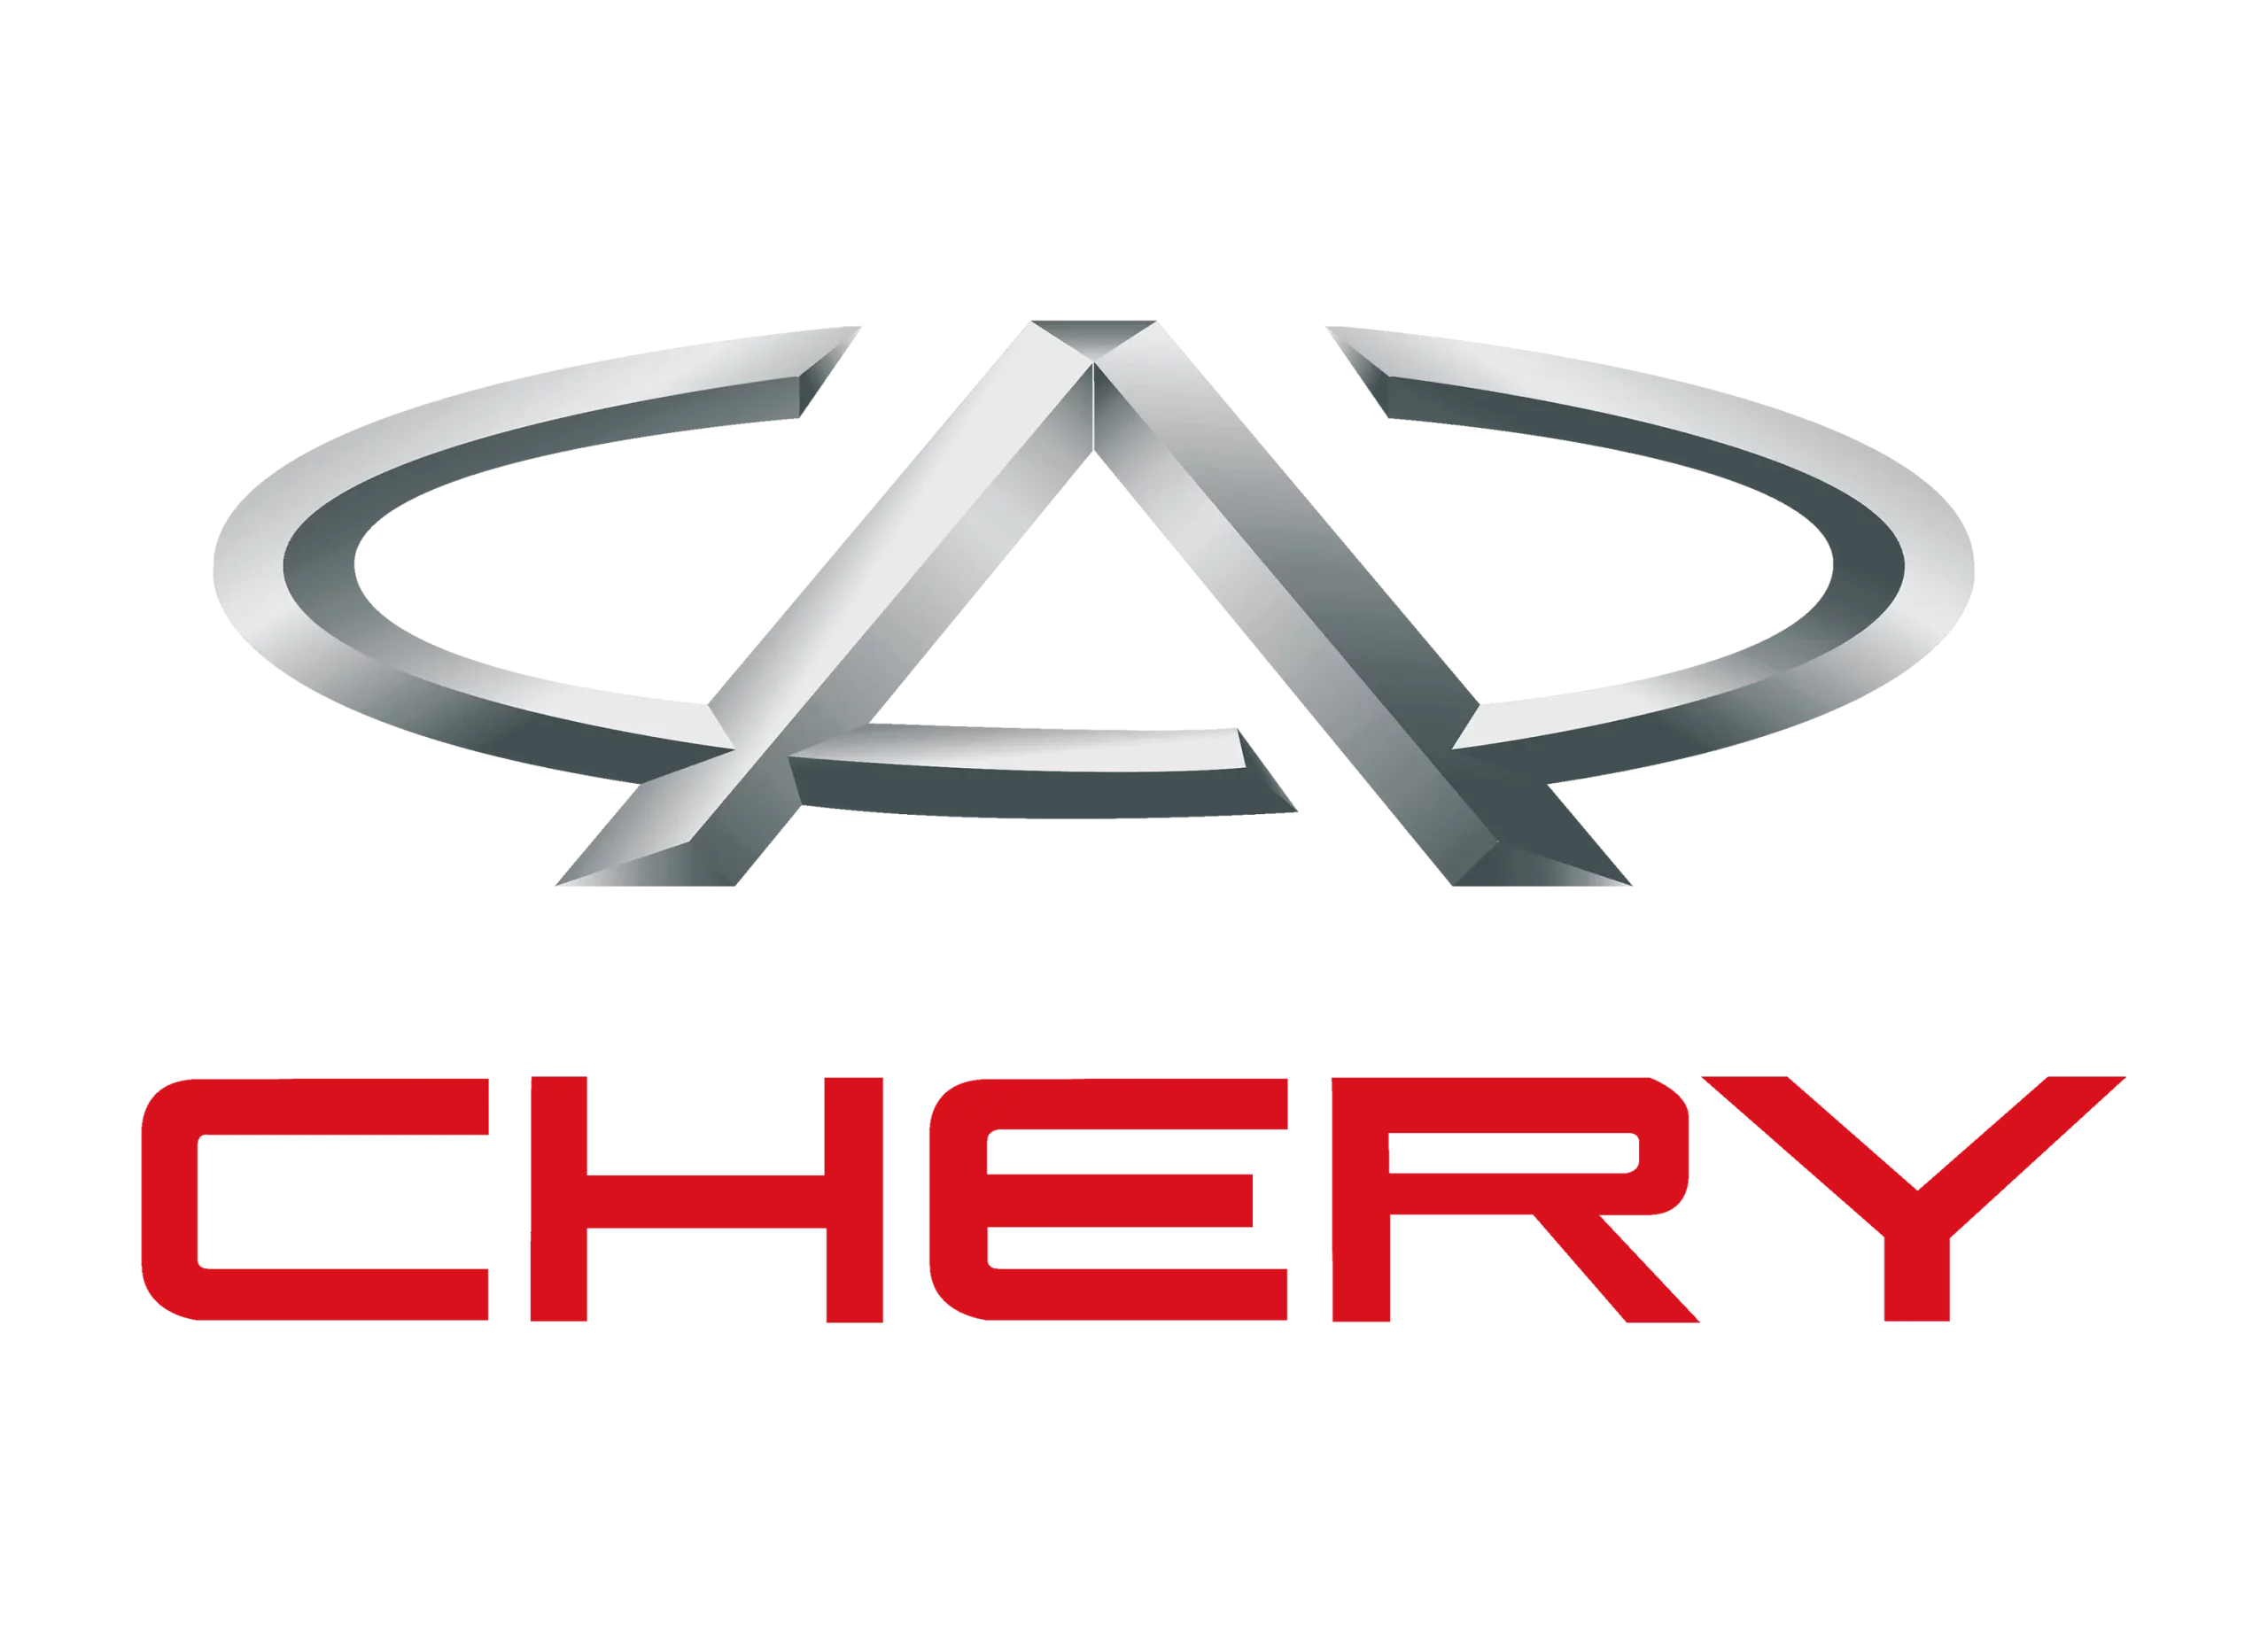 Chery logo 2001-2013